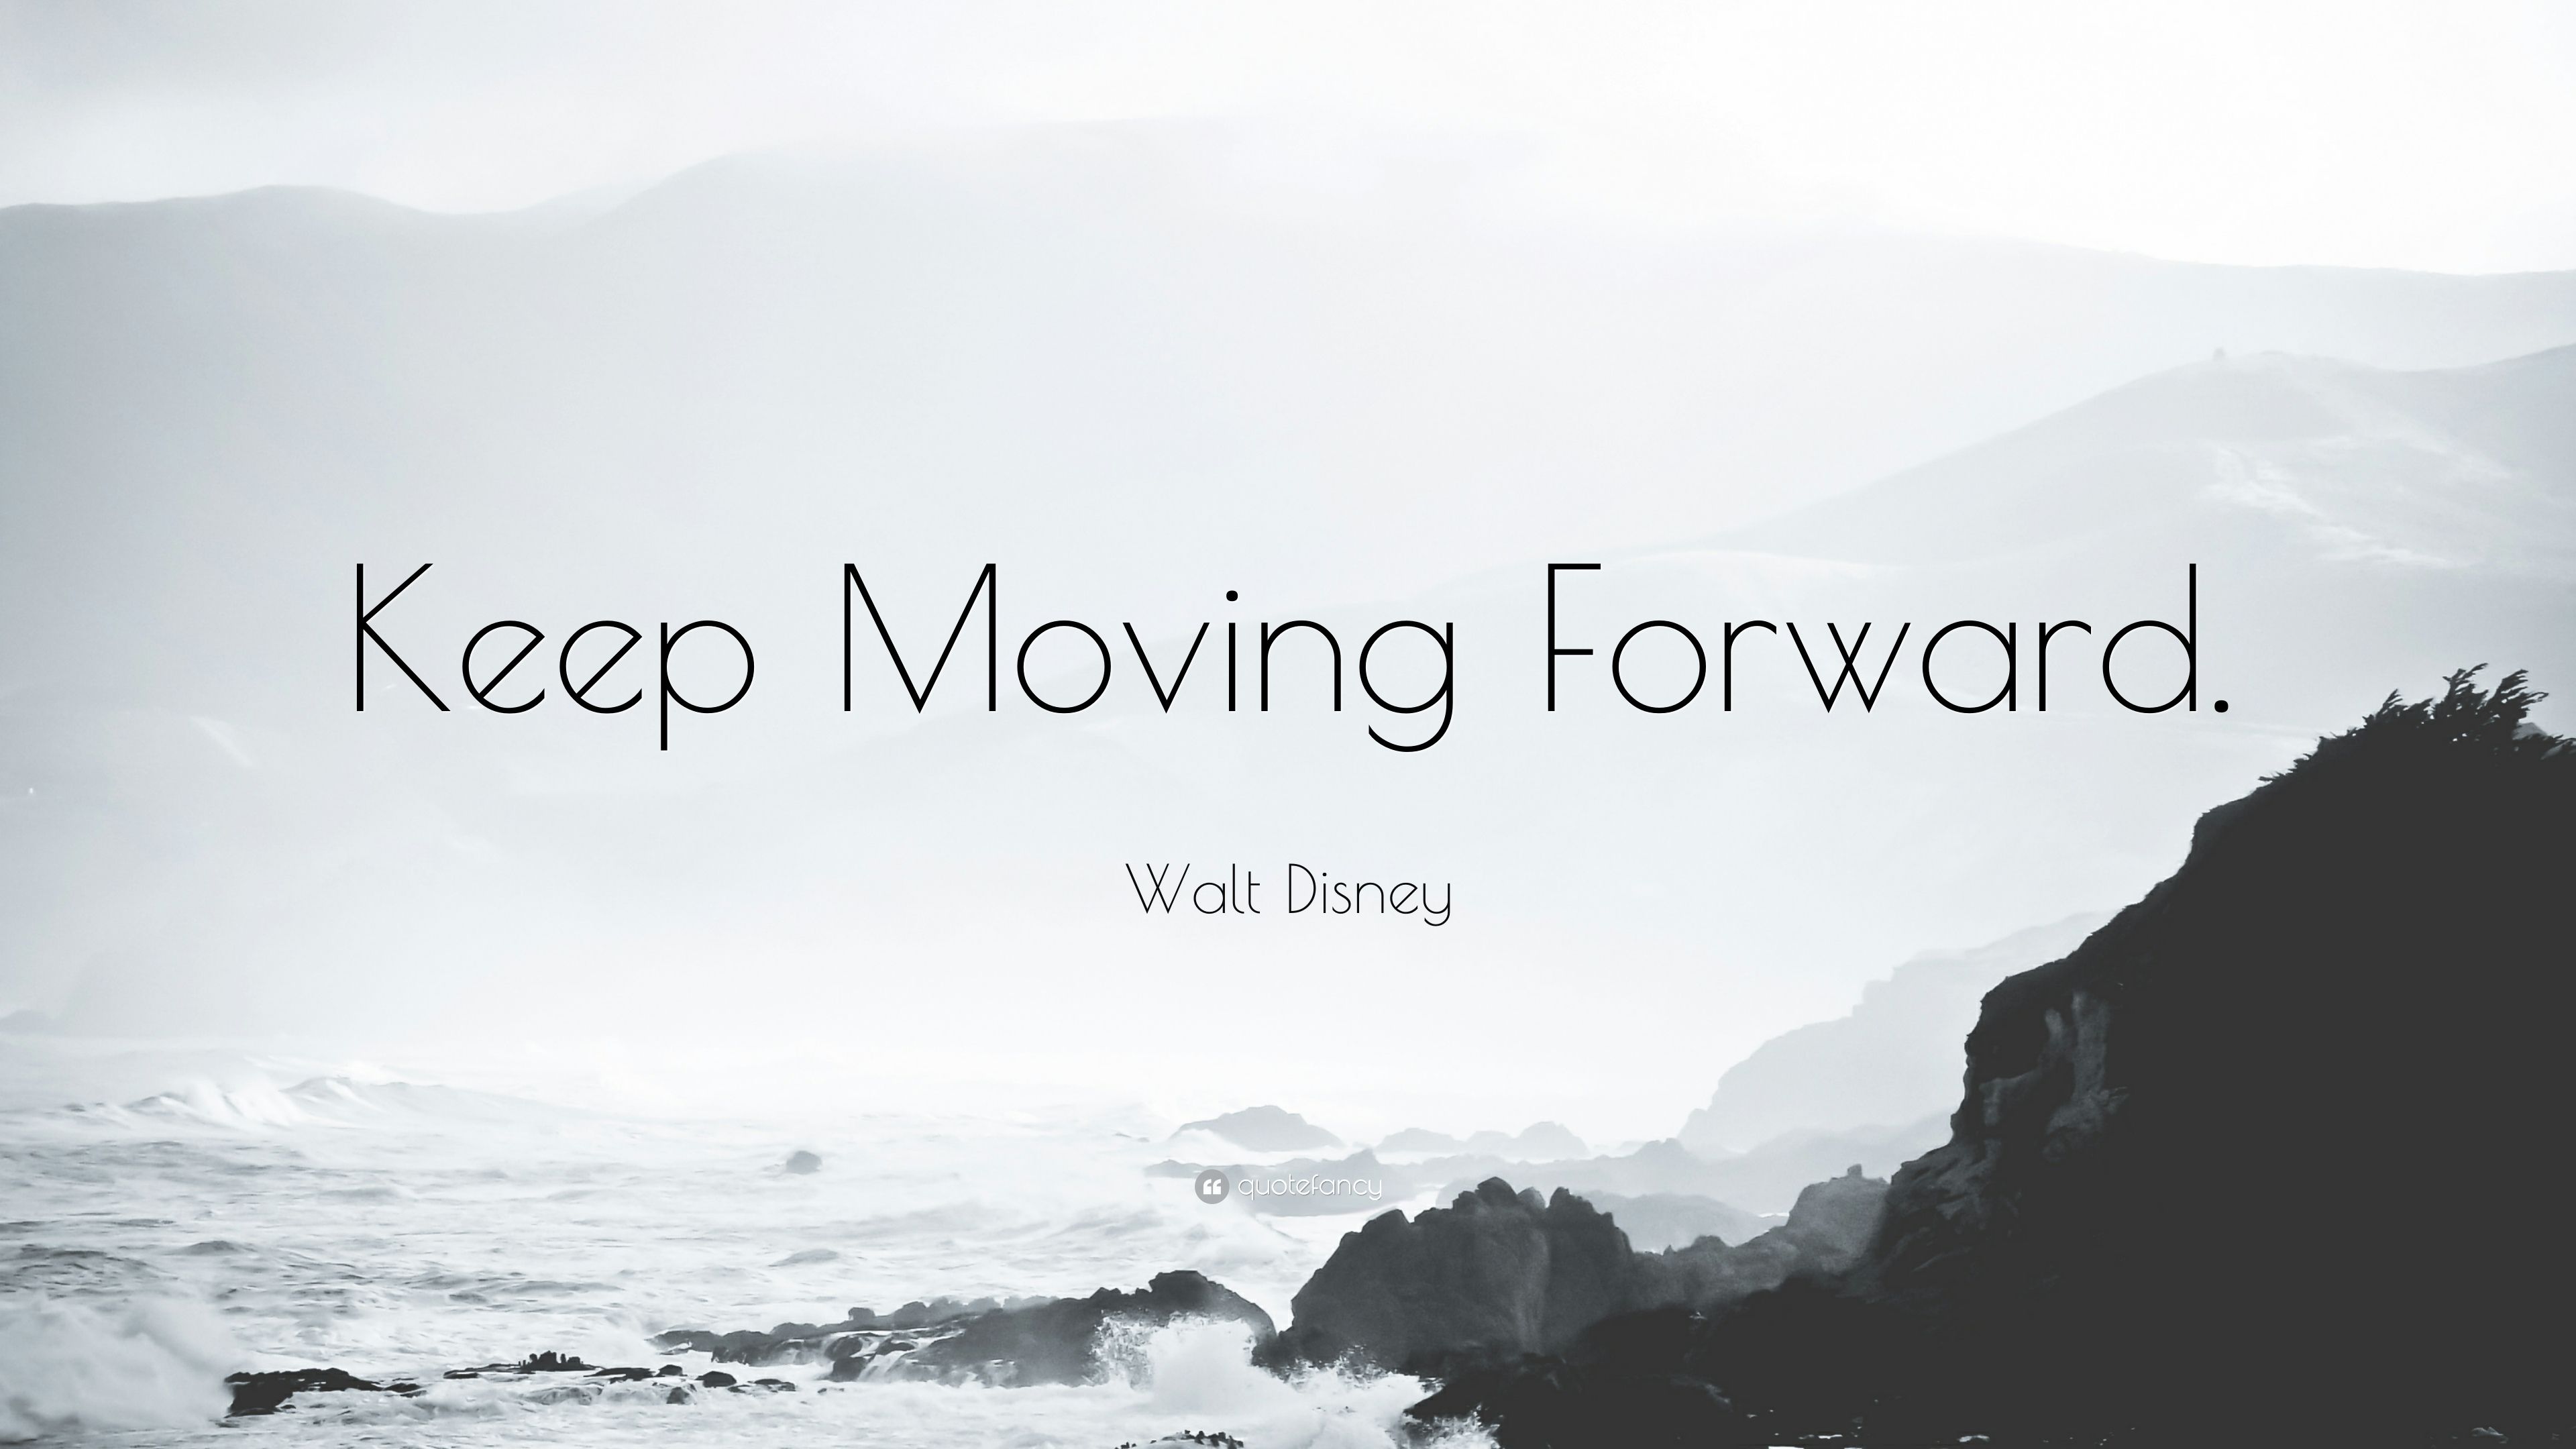 Walt Disney Quote: “Keep Moving Forward.” (10 wallpaper)